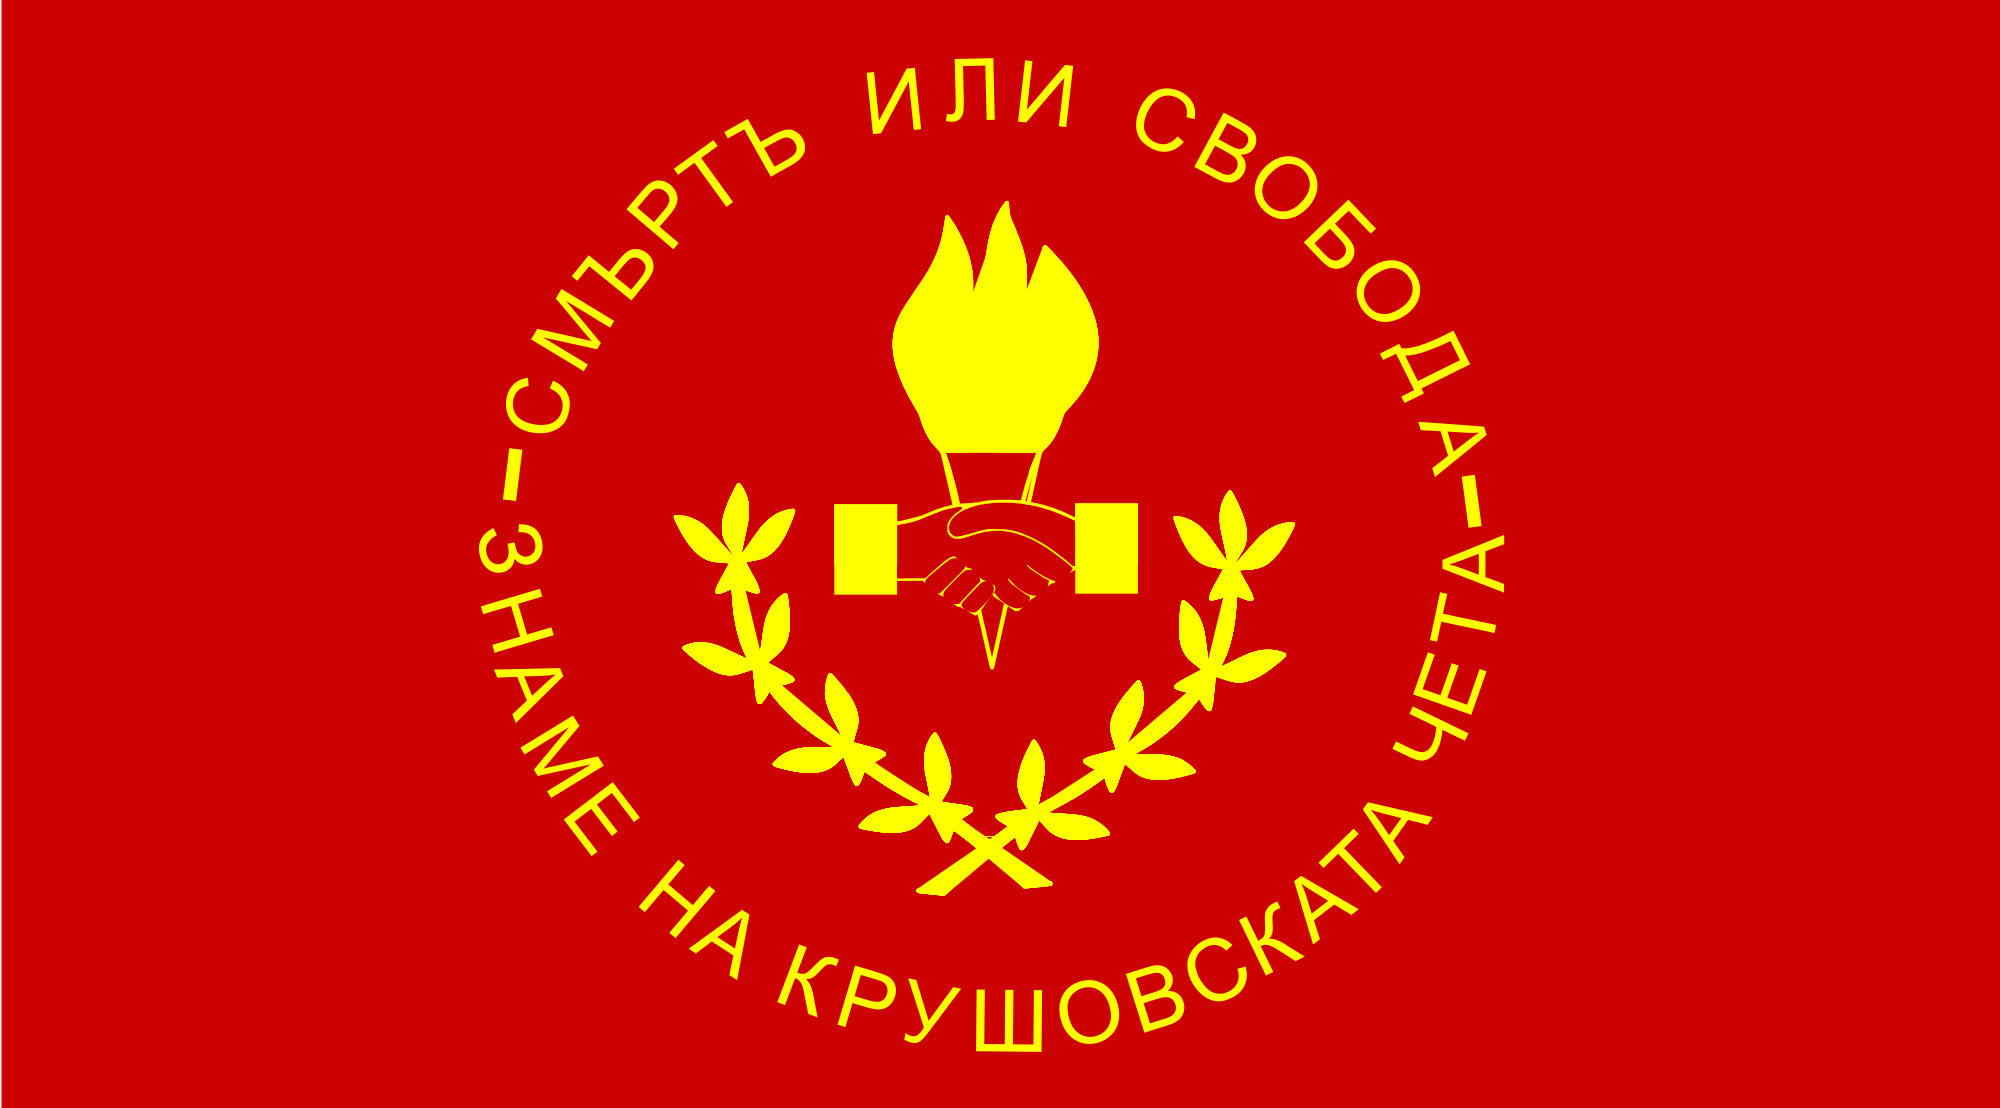 Kruševo Republic